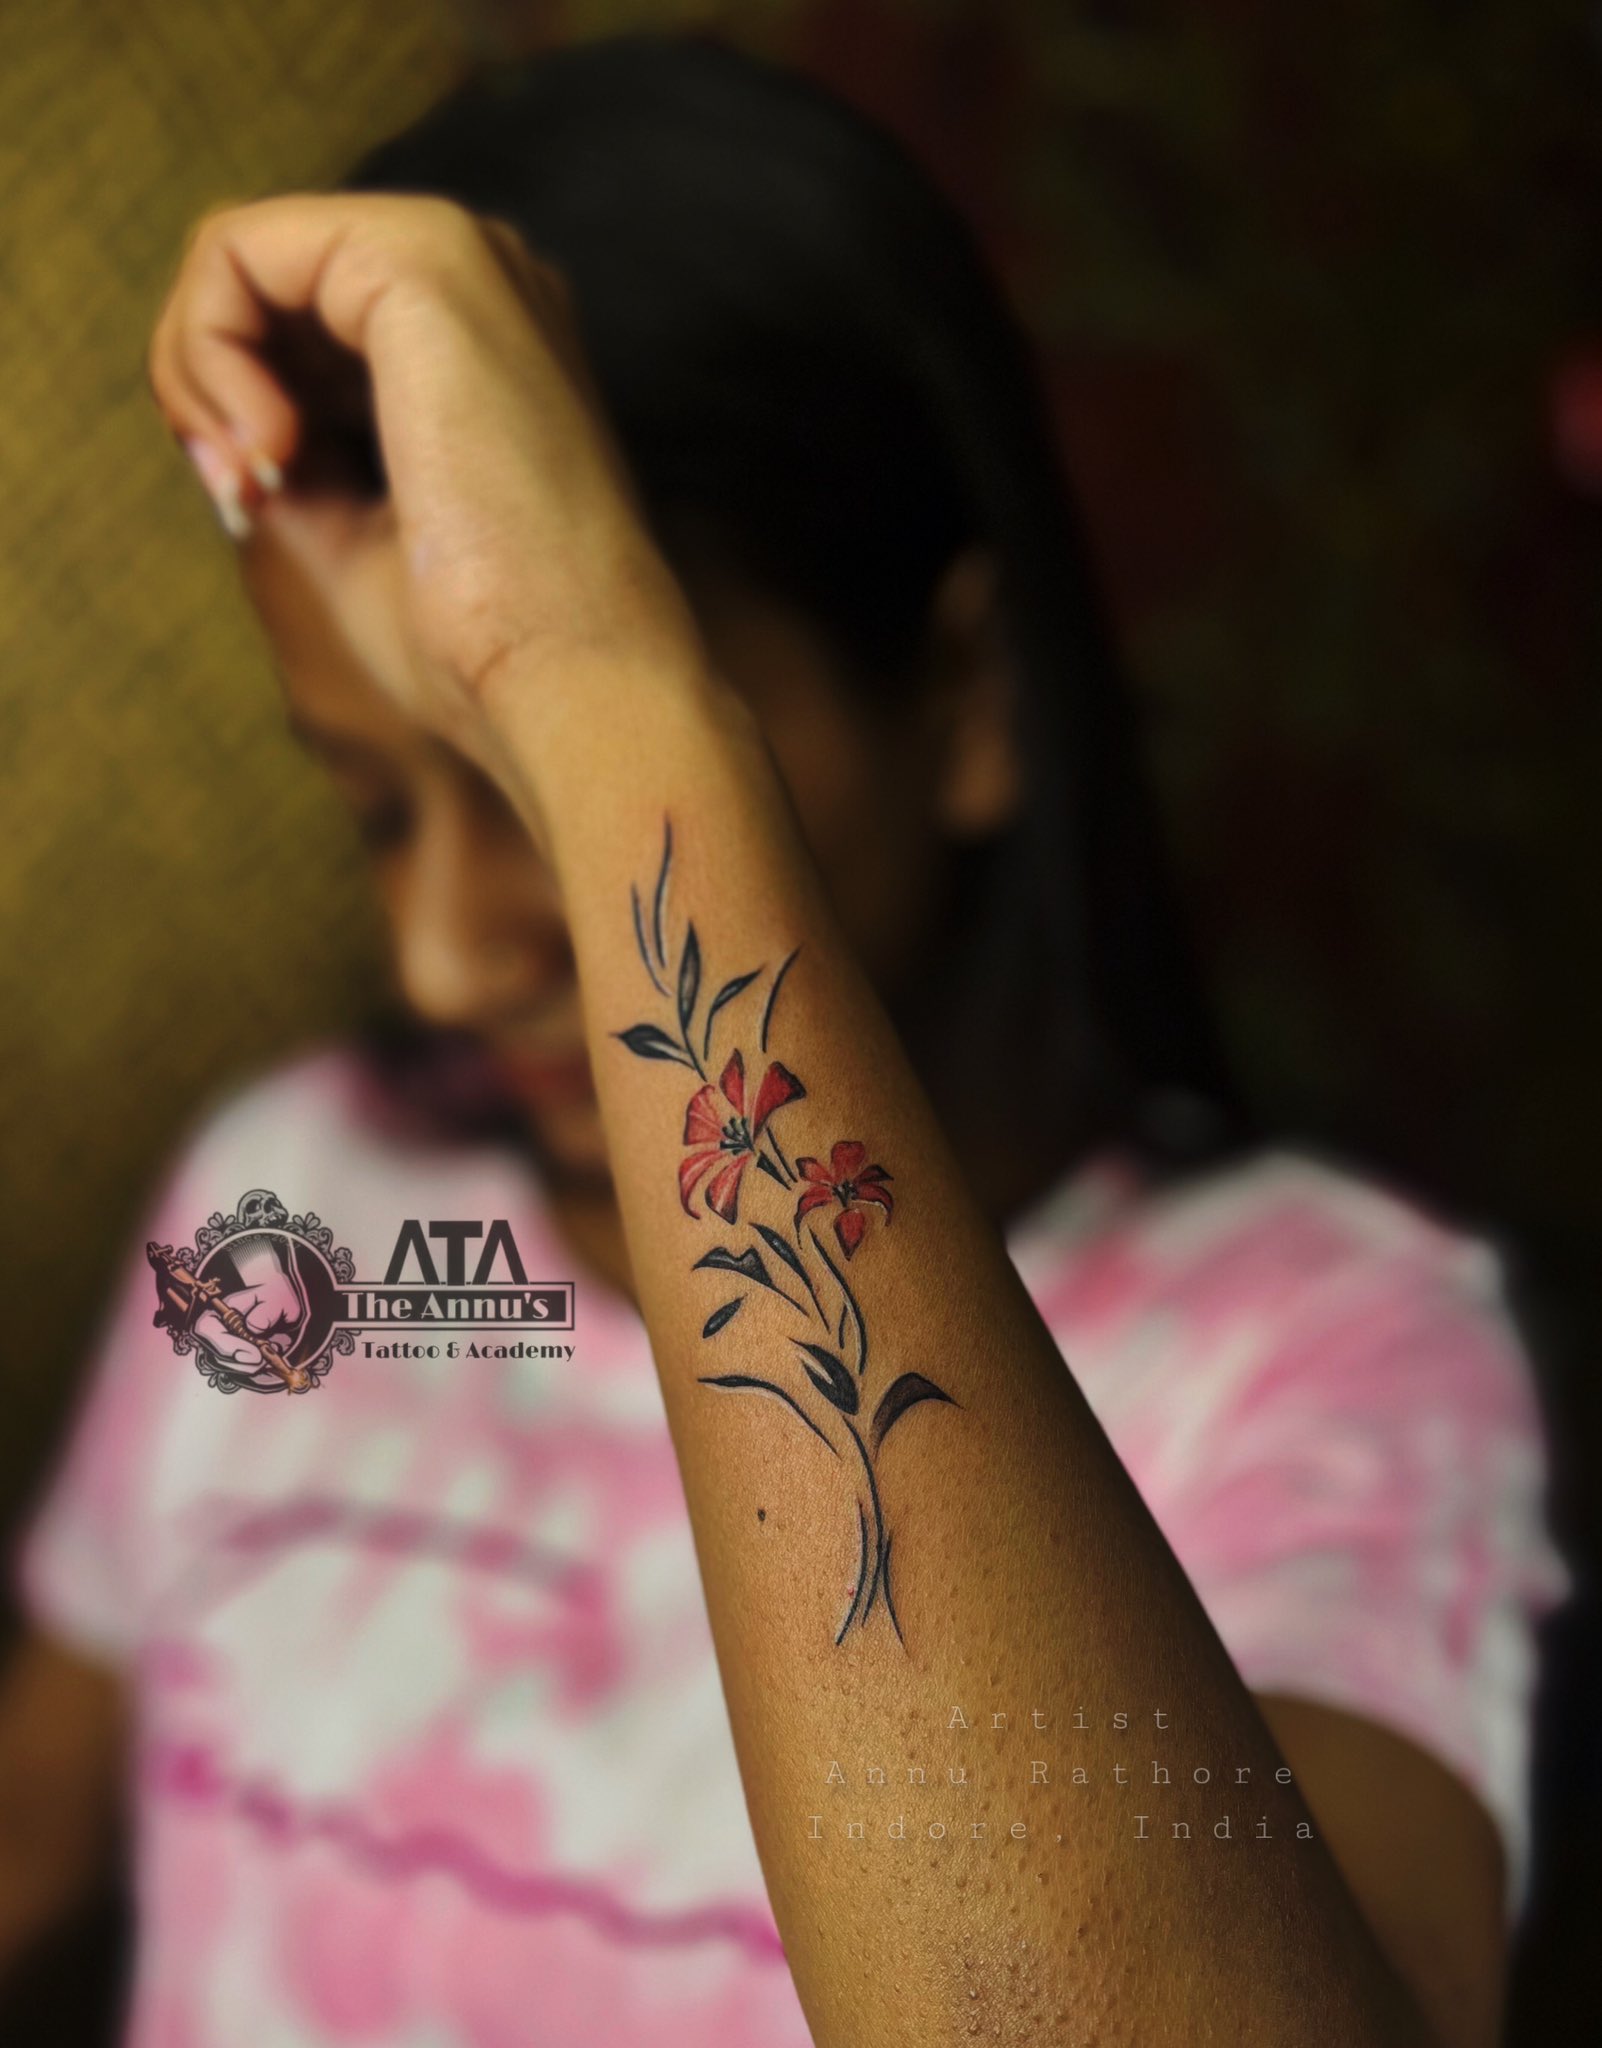 Maa Tattoo design .!!... - The annu's tattoo & academy | Facebook